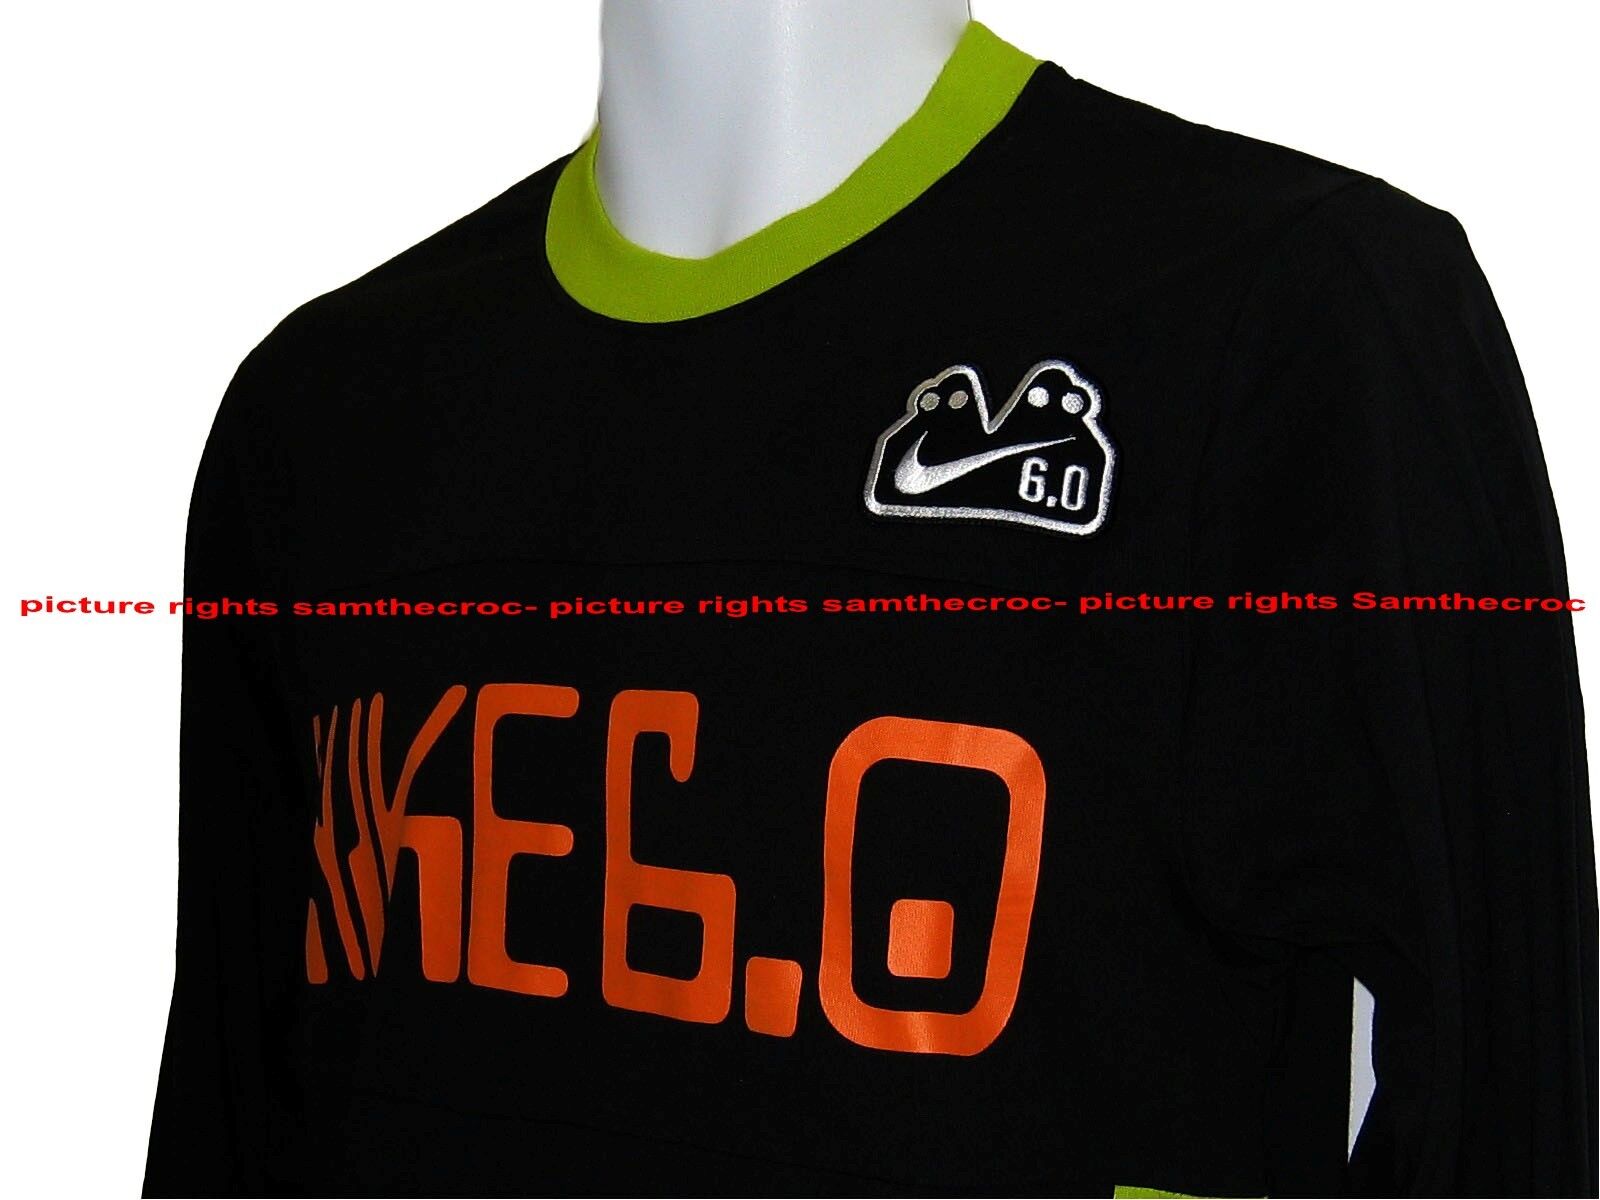 Encarnar corriente Abuelo Nueva camiseta de algodón NIKE 6.0 BMX látigo de cola negra adultos S  886691931904 | eBay